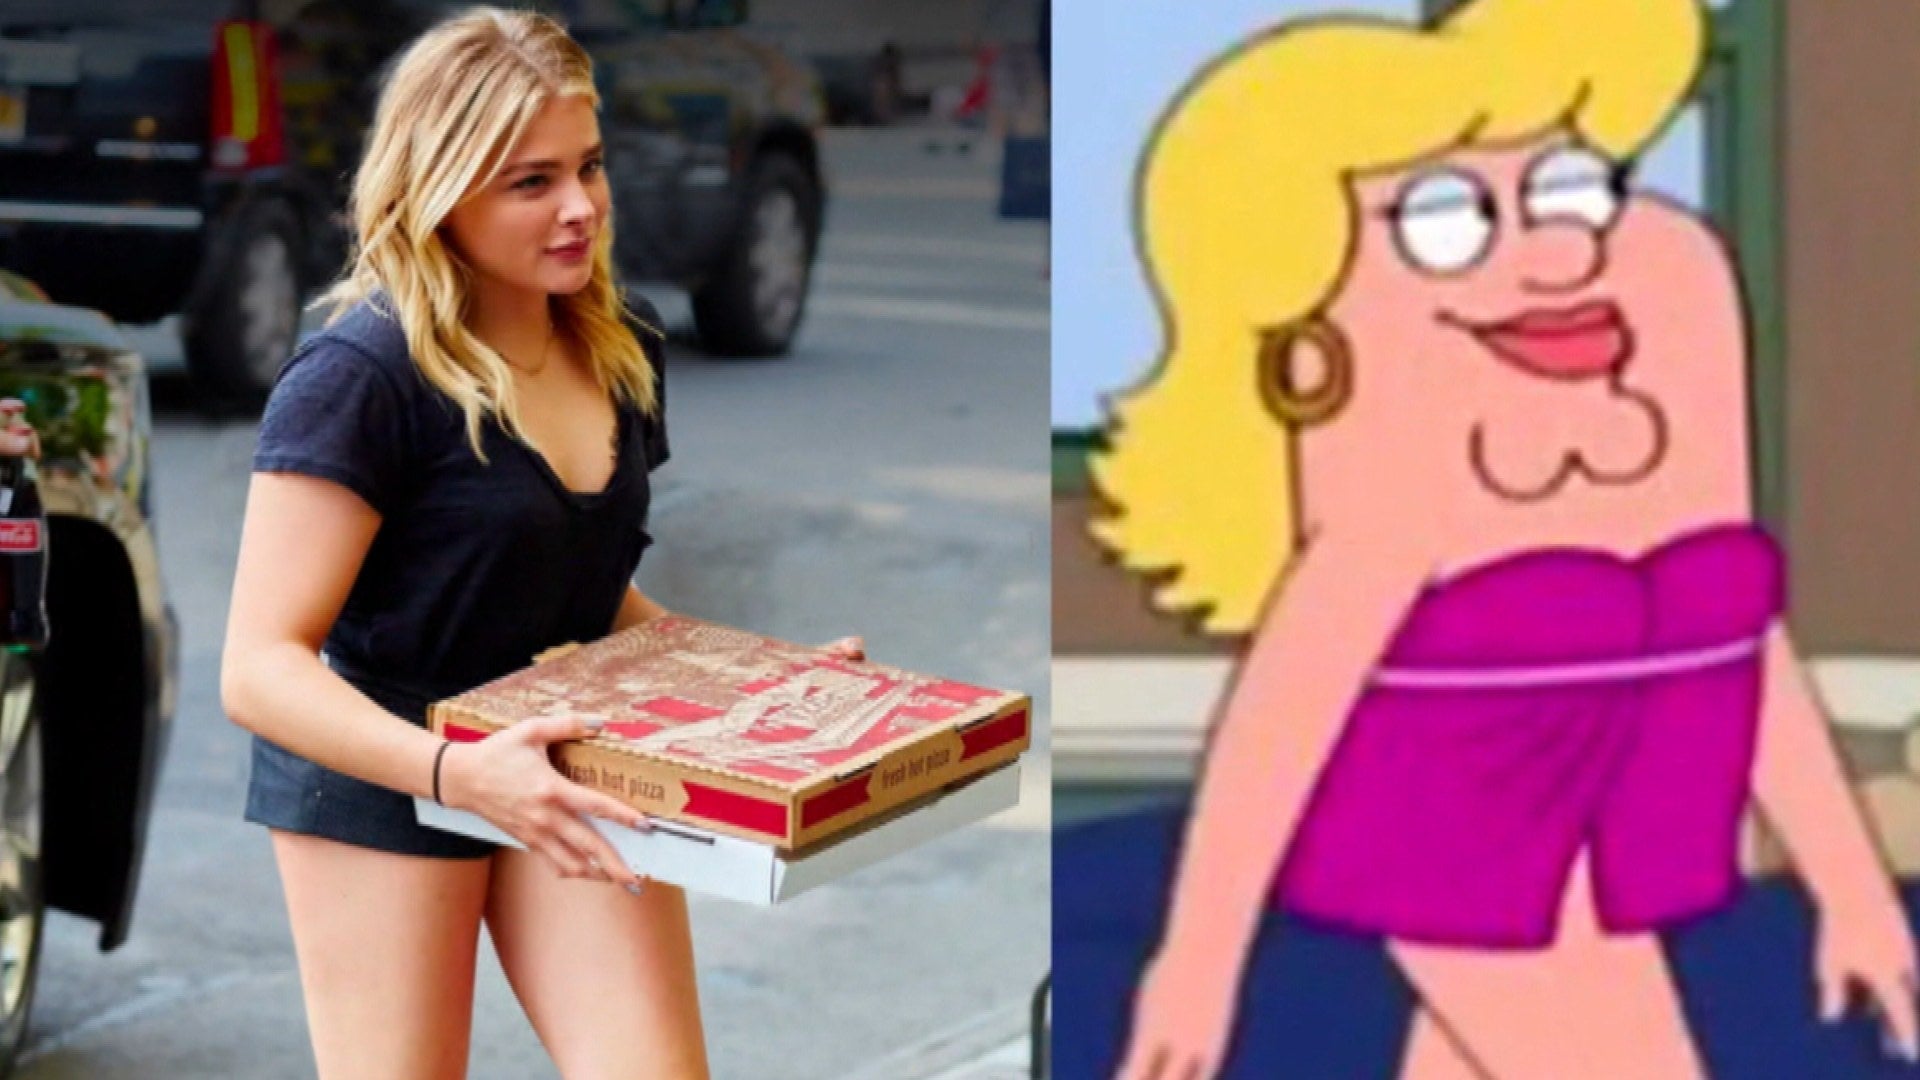 Chloë Grace Moretz Opens Up About Horrific 'Family Guy' Meme